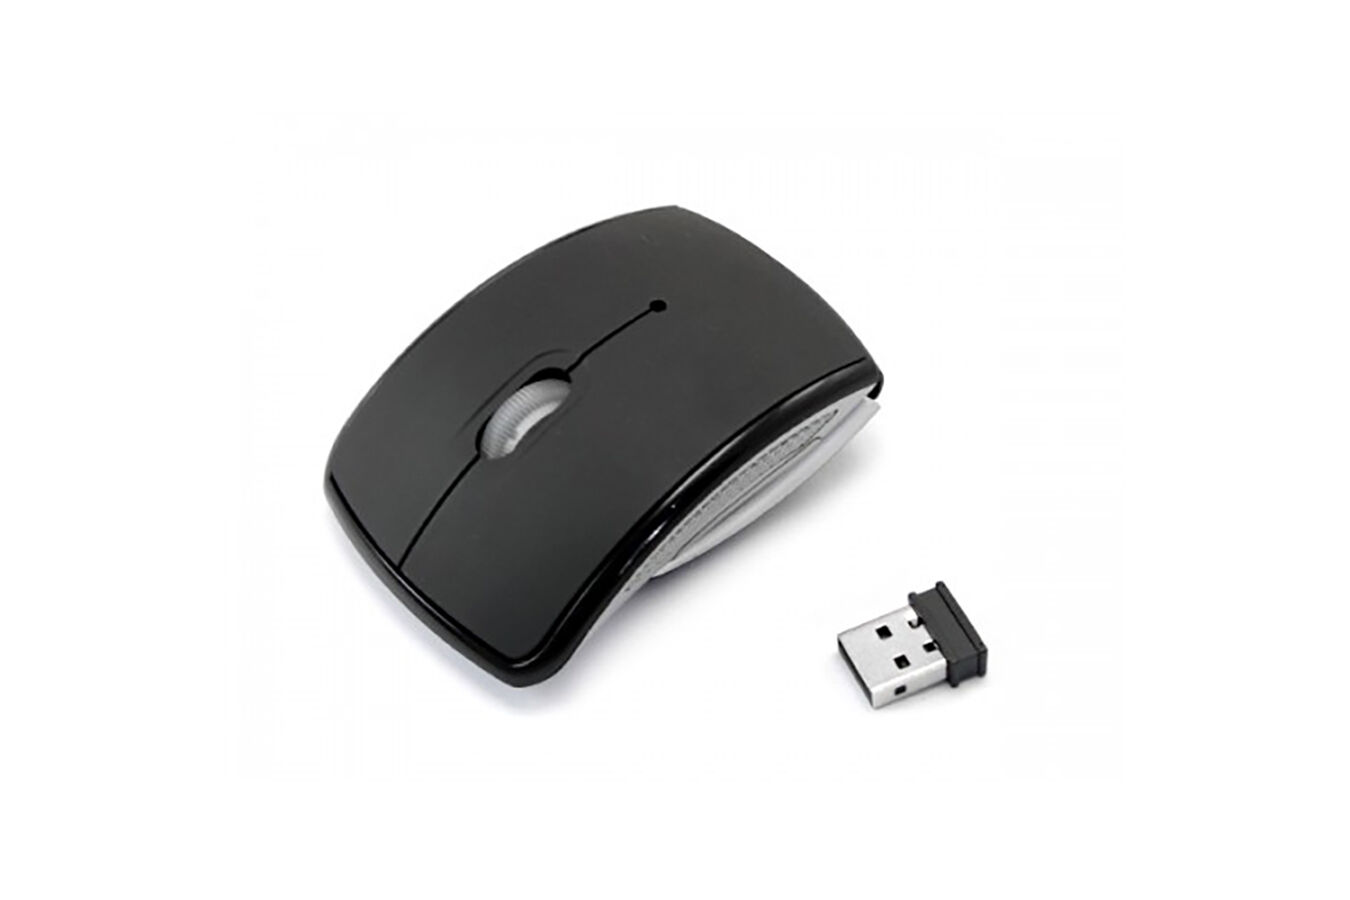 Silent Click Quiet Folding Optical Wireless Arc Mouse Portable Compact BLACK